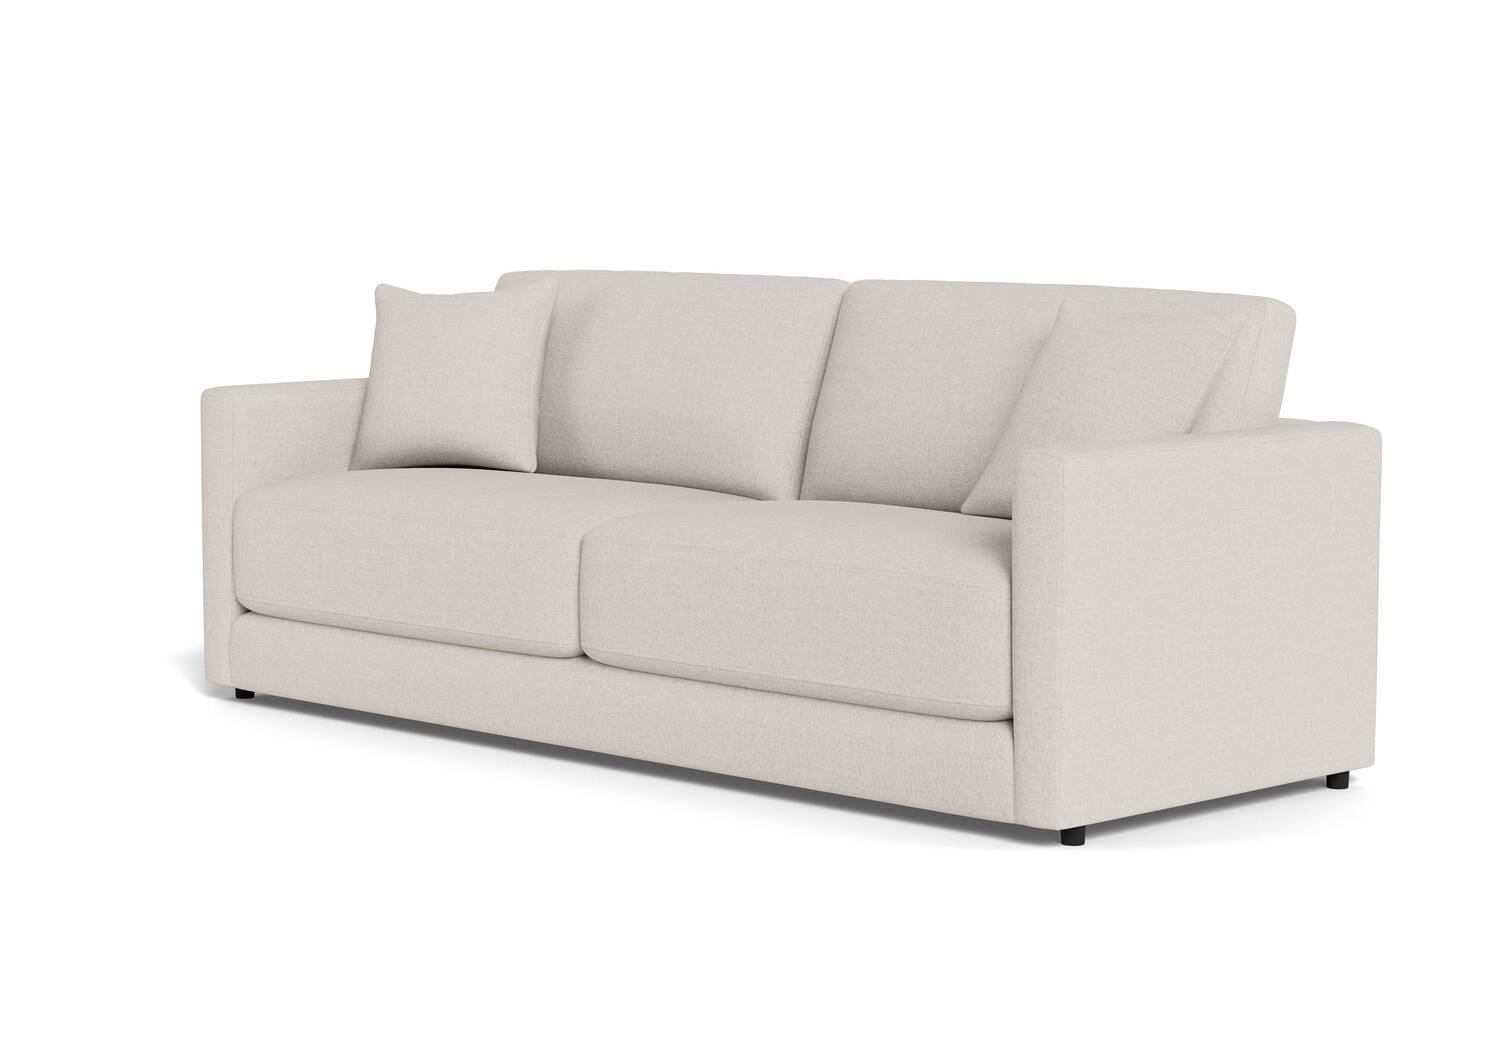 Adley Custom Sofa